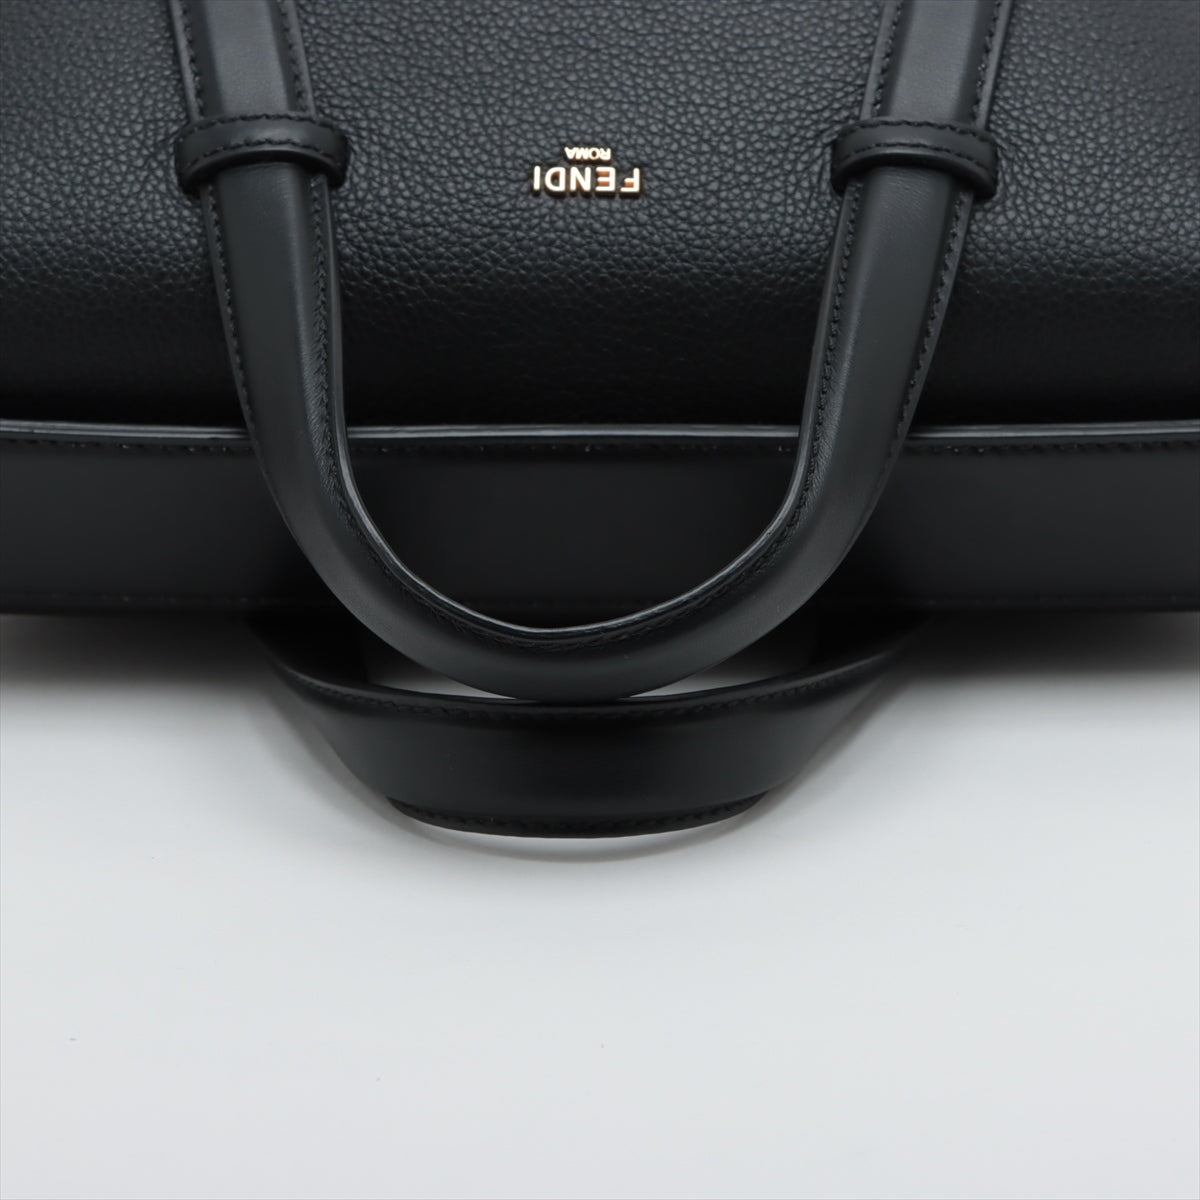 Fendi Boston 365 Leather 2way handbag Black 8BL152